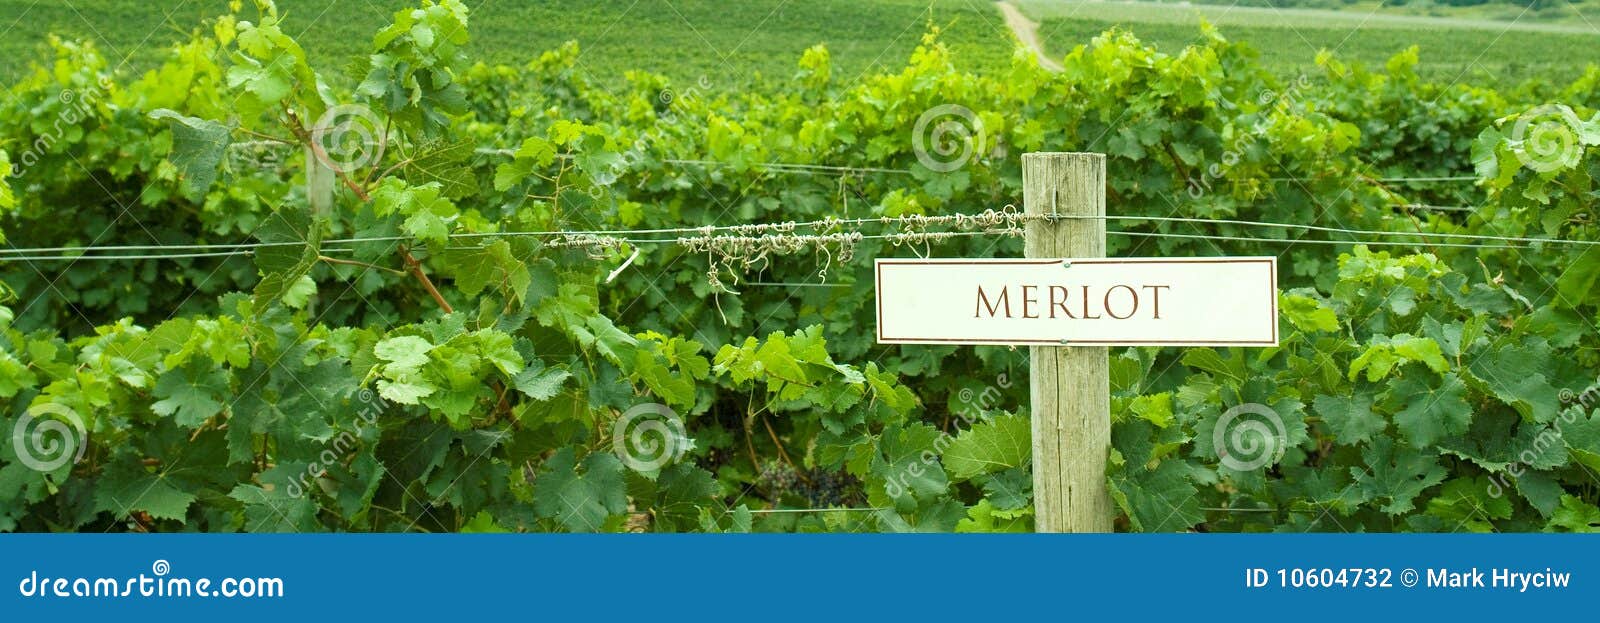 vineyard merlot sign